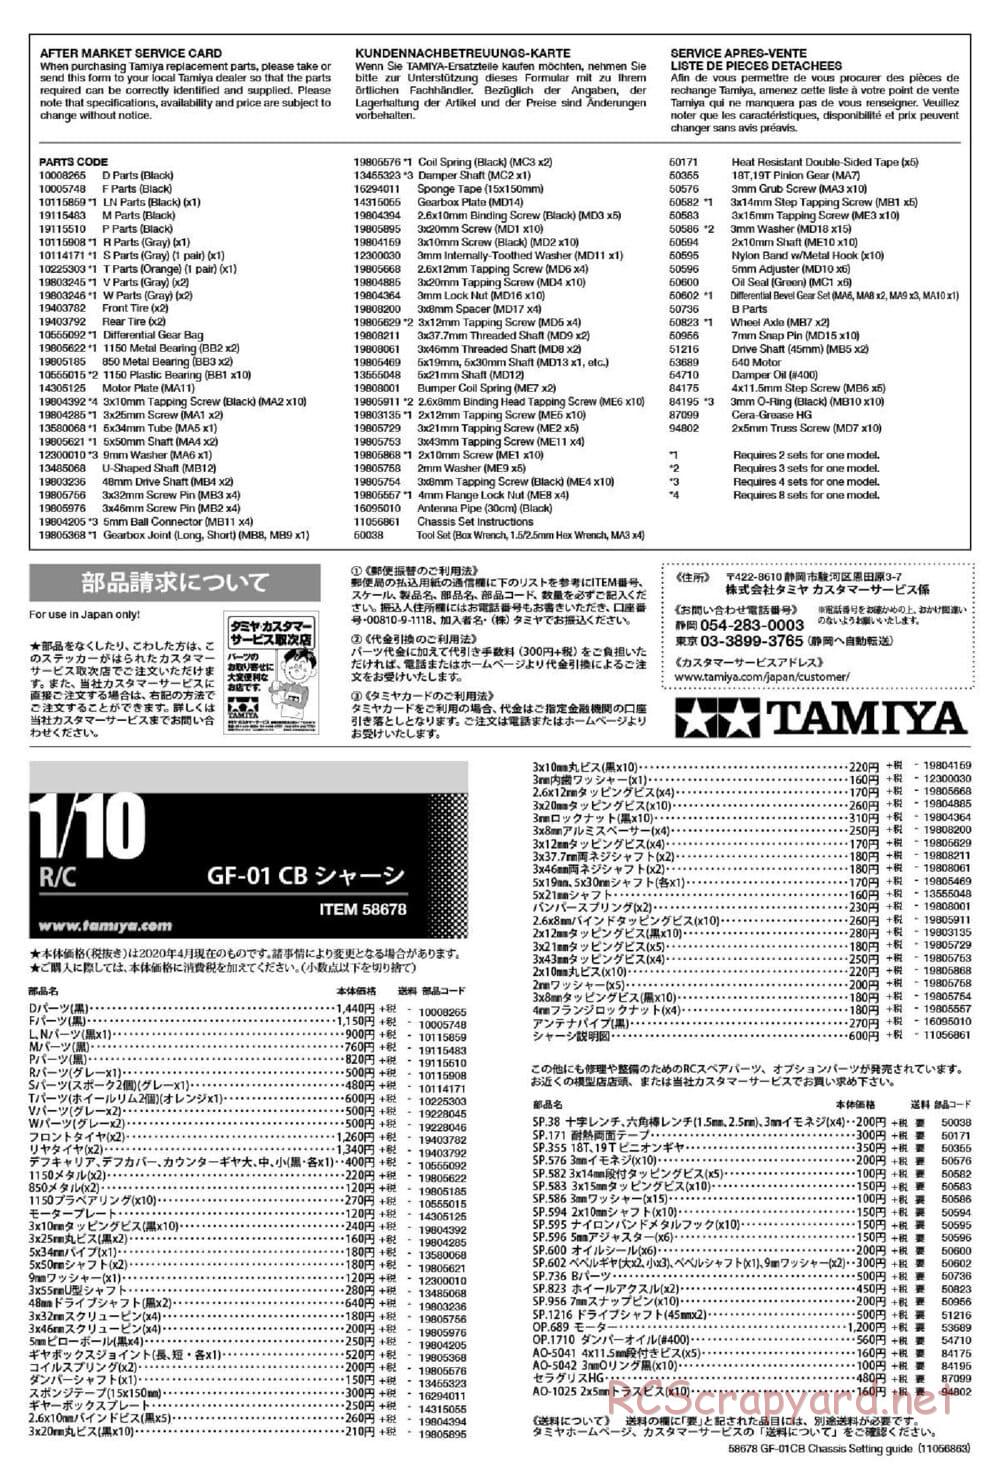 Tamiya - Comical Avante - GF-01CB Chassis - Manual - Page 27